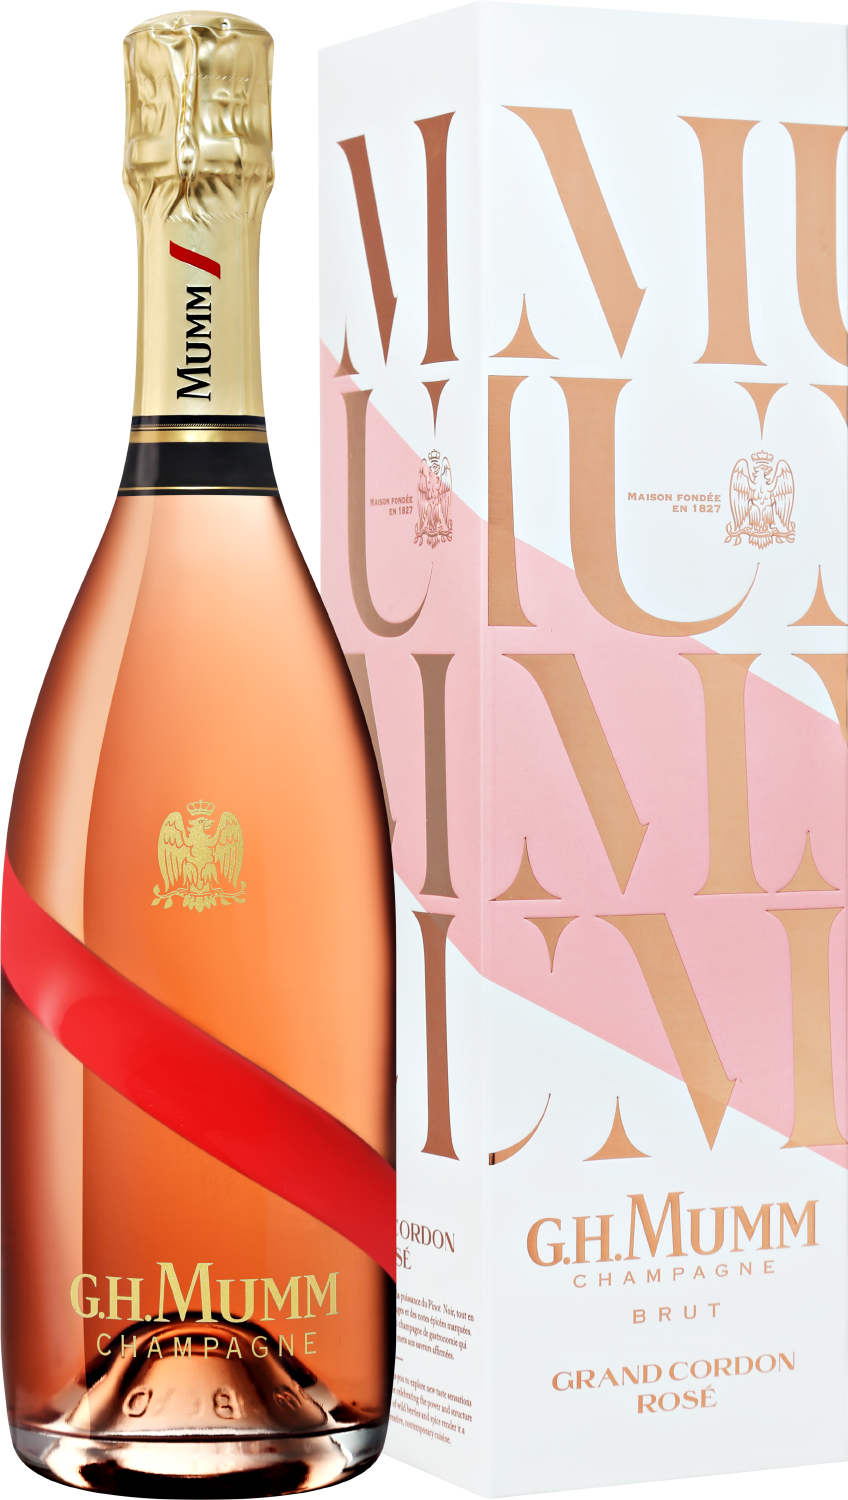 G.H. Mumm Grand Cordon Rose Champagne AOC Brut (gift box) mumm cordon rouge brut champagne aoc